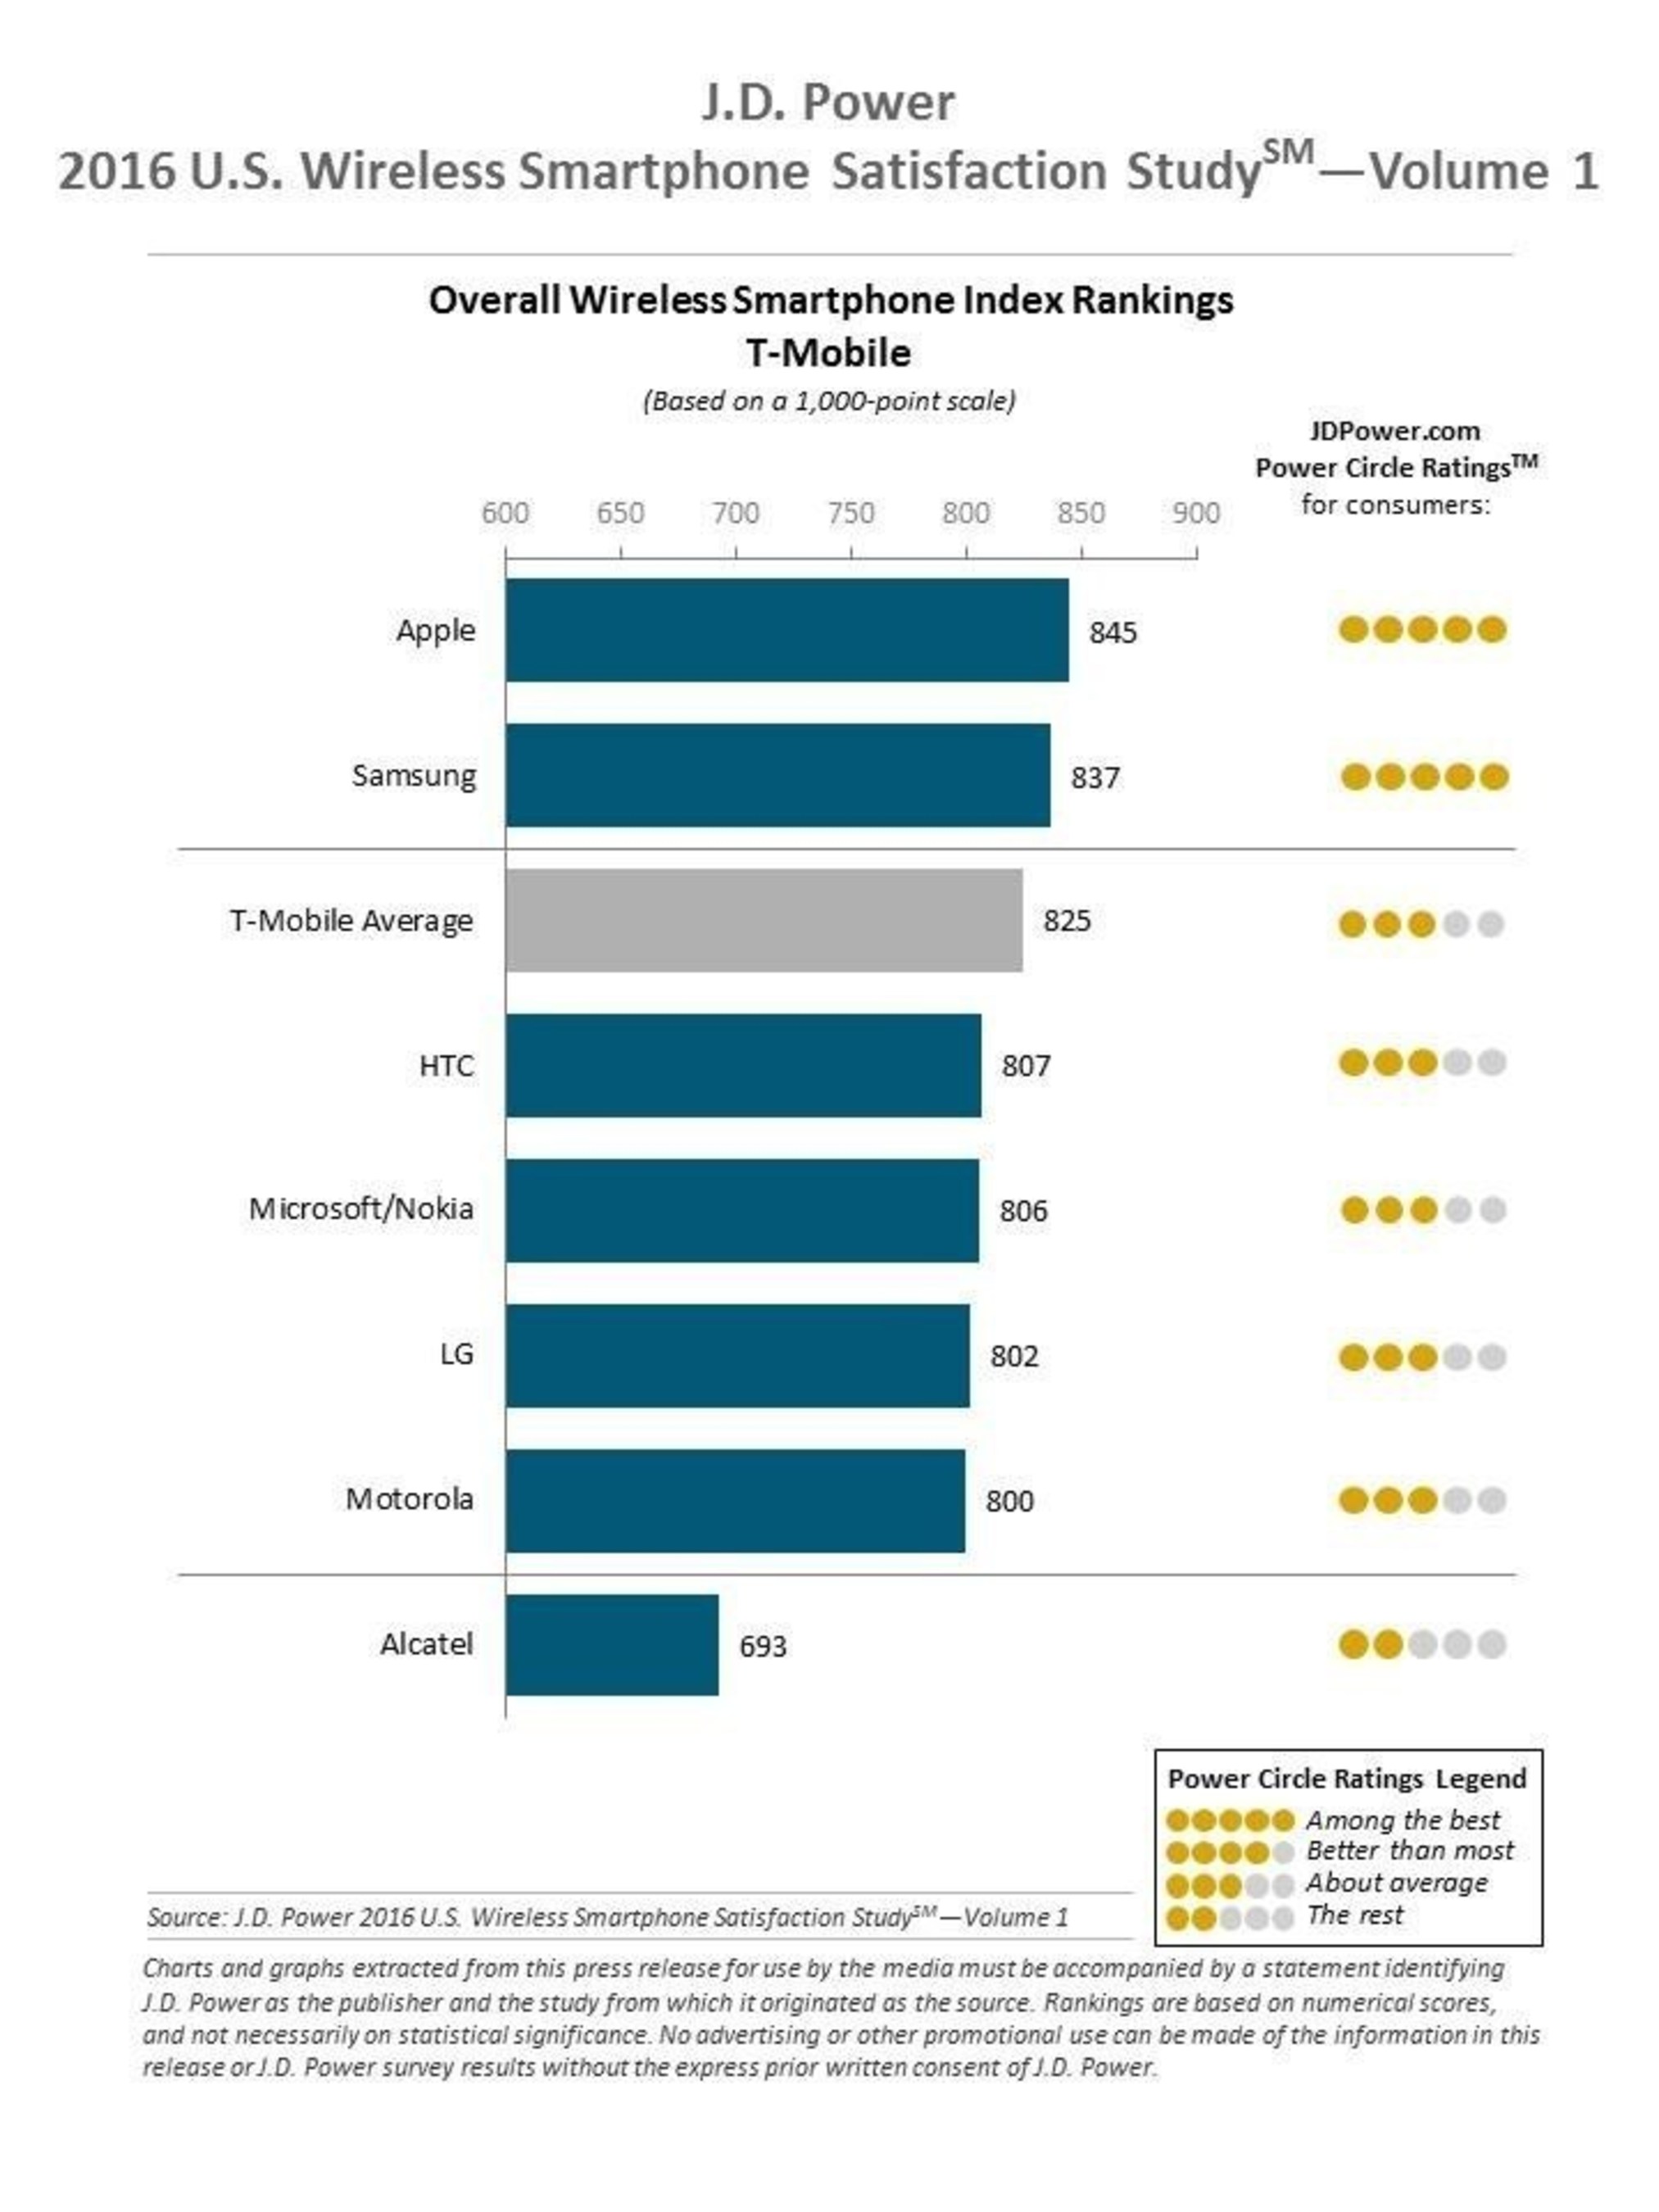 2016 J.D. Power Wireless Smartphone Ranking T-Mobile